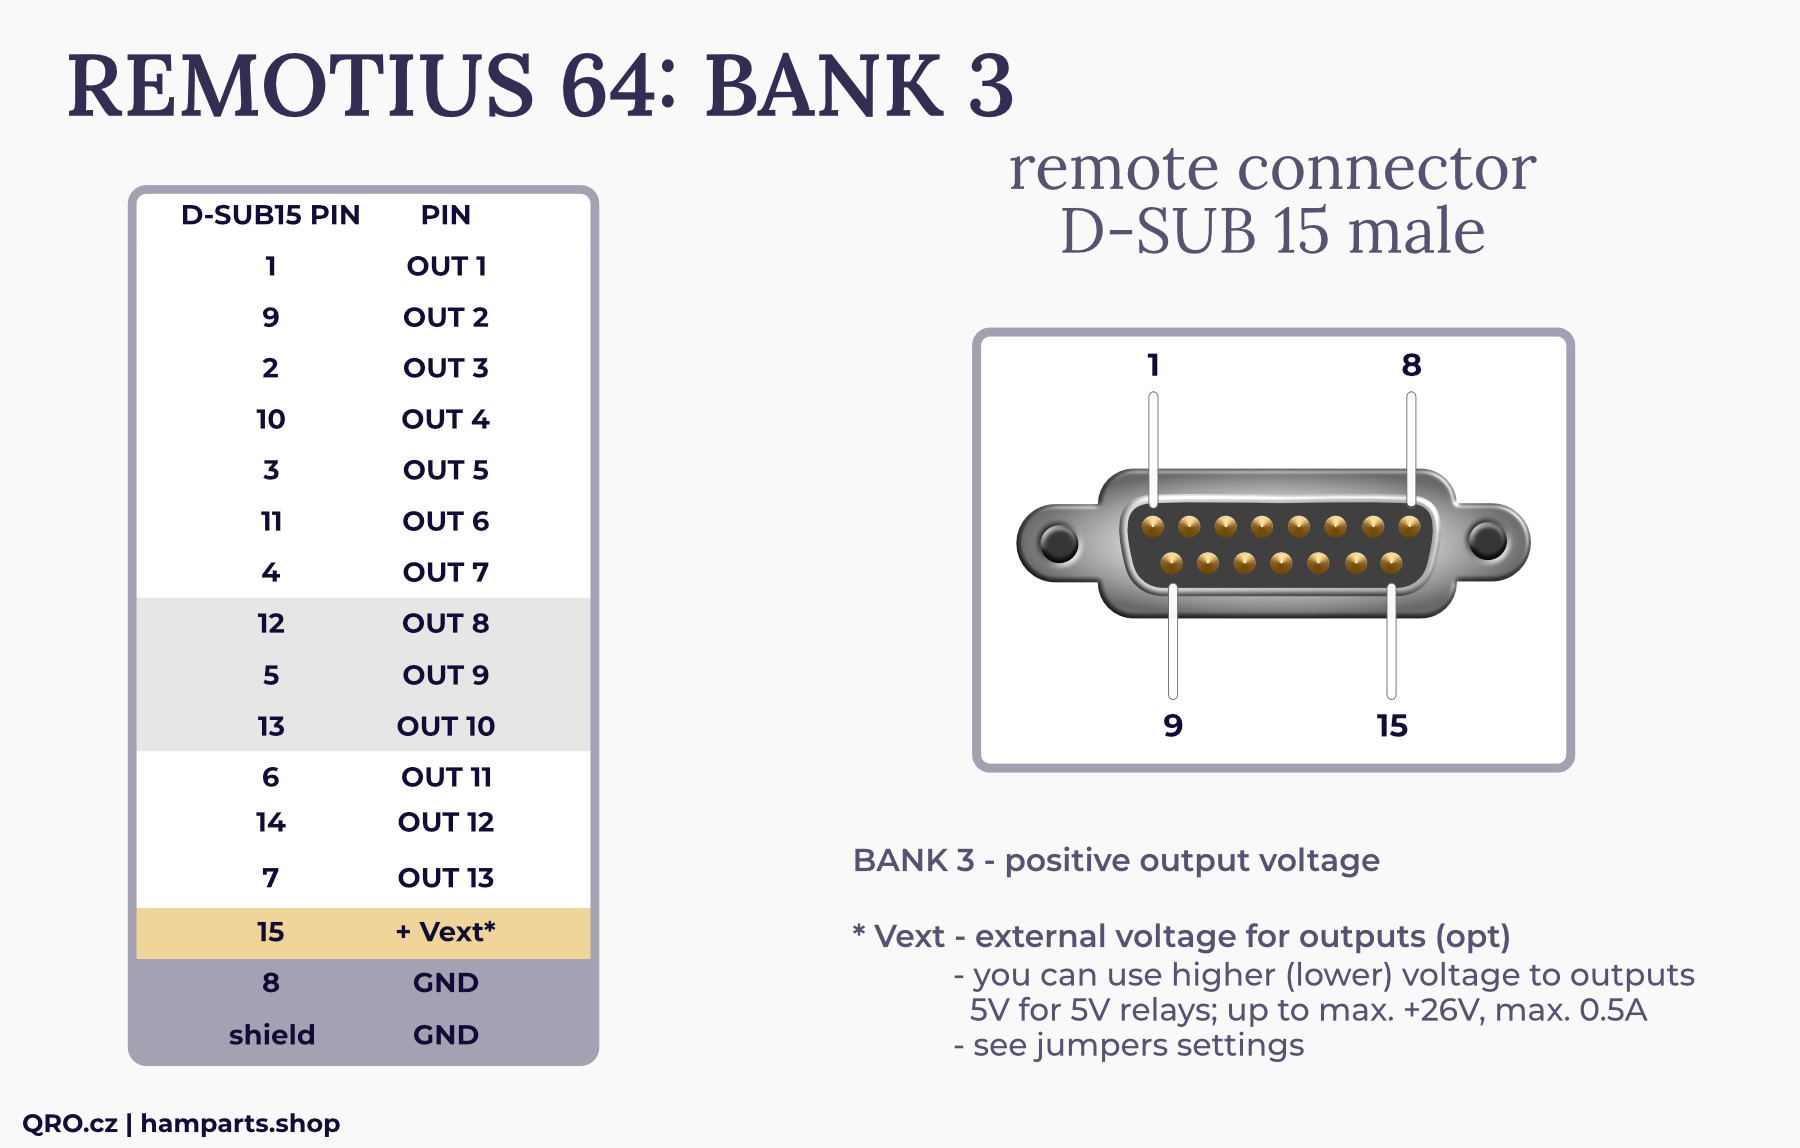 remotius 64 bank 3 remote connector D-SUB15 male qro.cz hamparts.shop